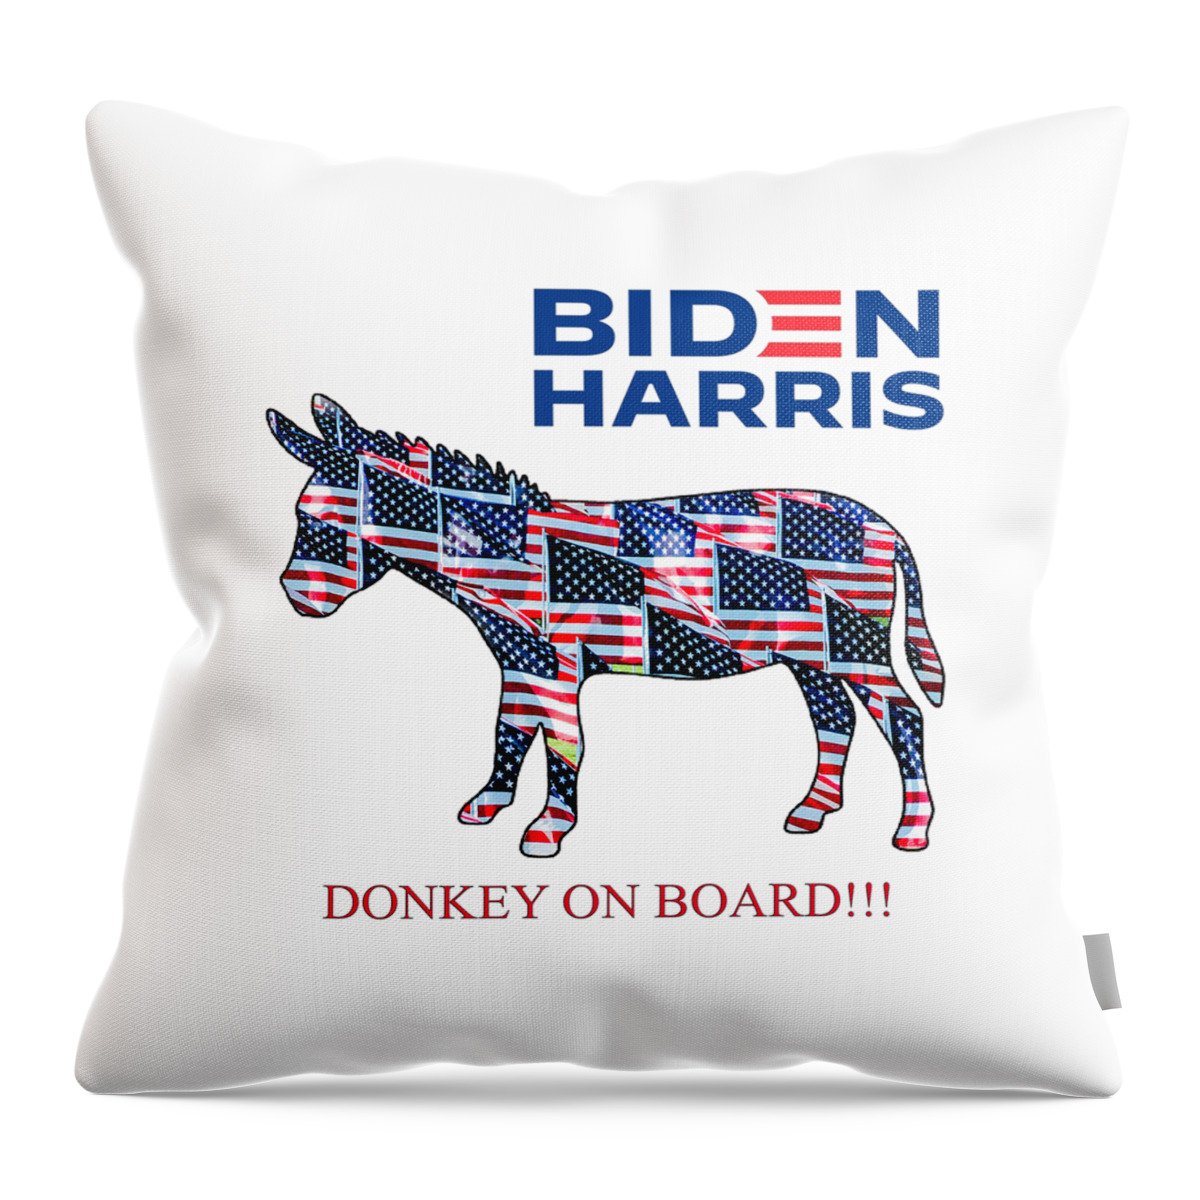 Joe Biden Throw Pillow featuring the photograph Biden/Harris Donkey on Board by Julian Starks